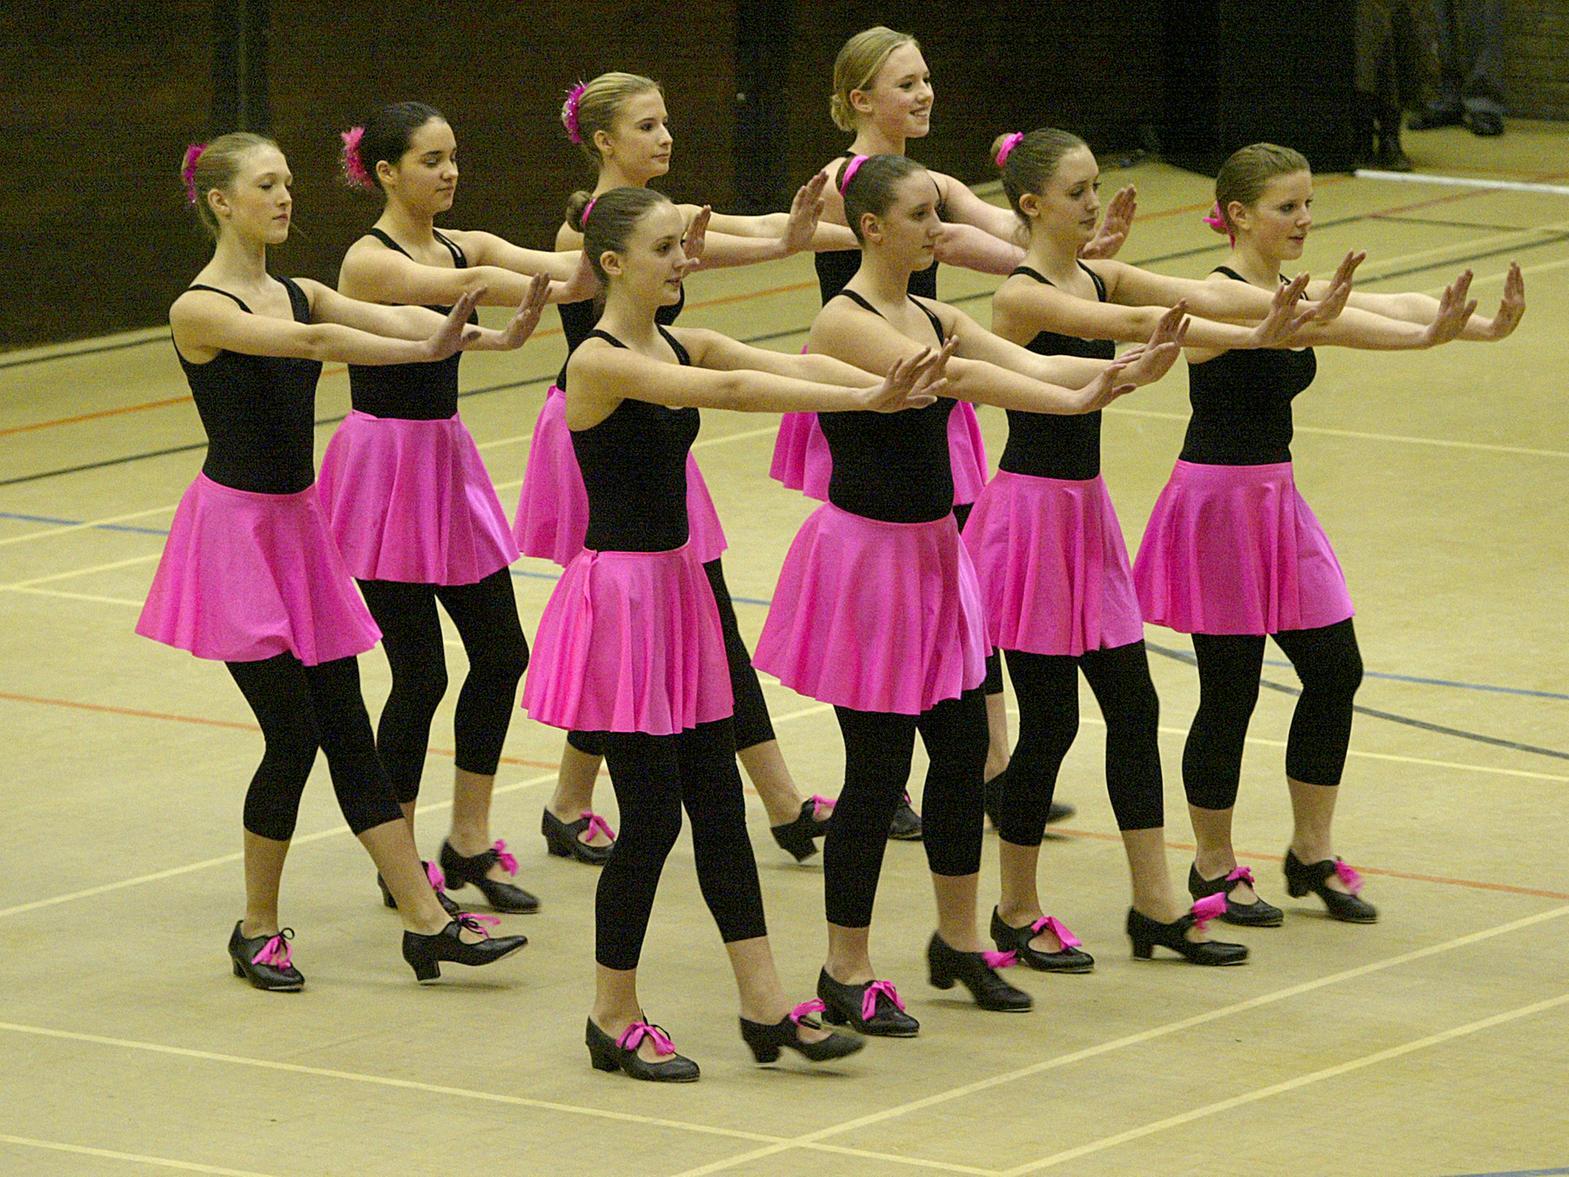 Dancers from Barbara Peters School of Dance from Huddersfield.